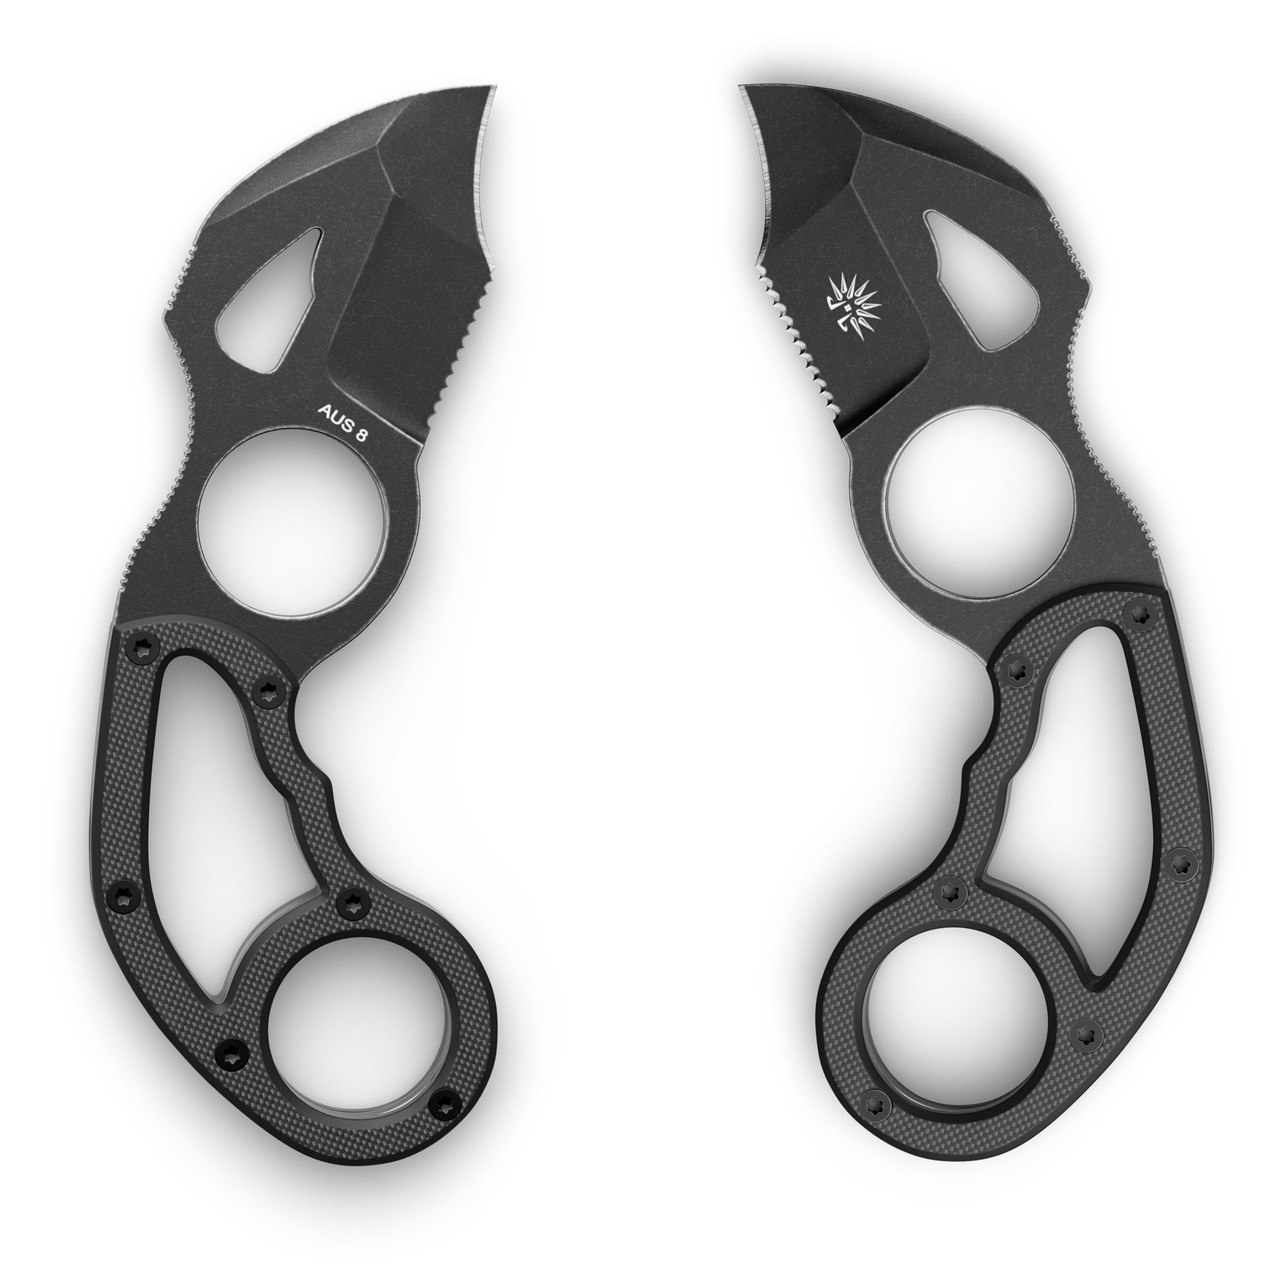 buy-fixed-blade-knife-for-pocket-carry-online.jpg